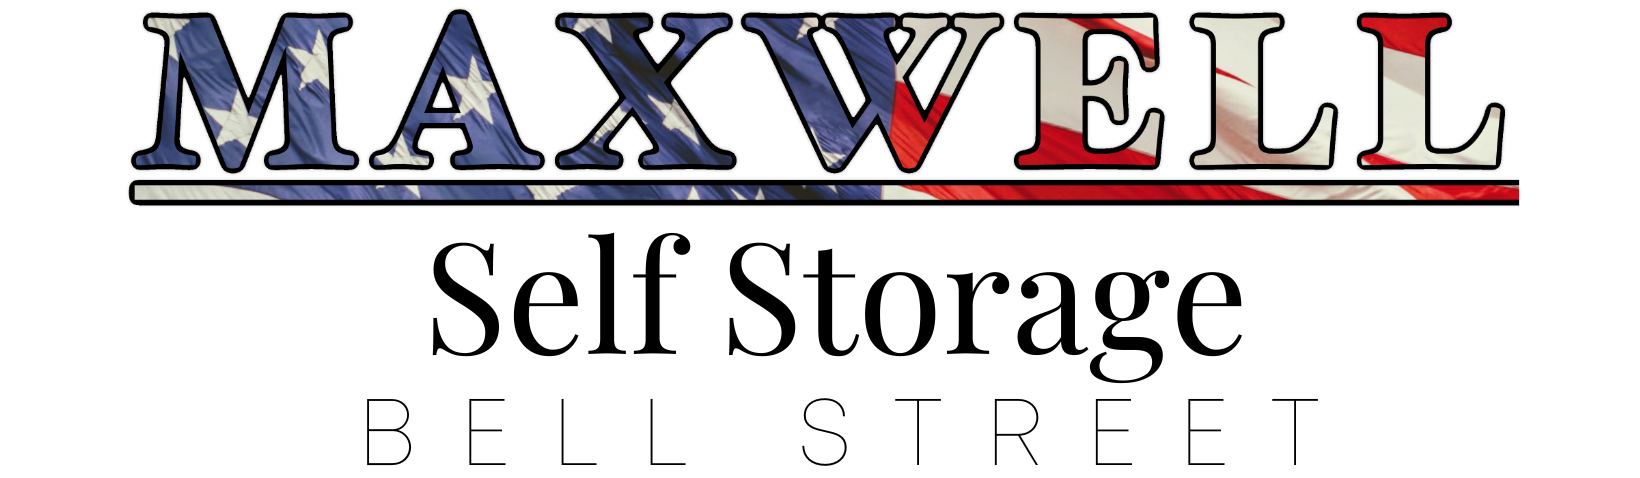 Maxwell Self Storage in Montgomery, AL